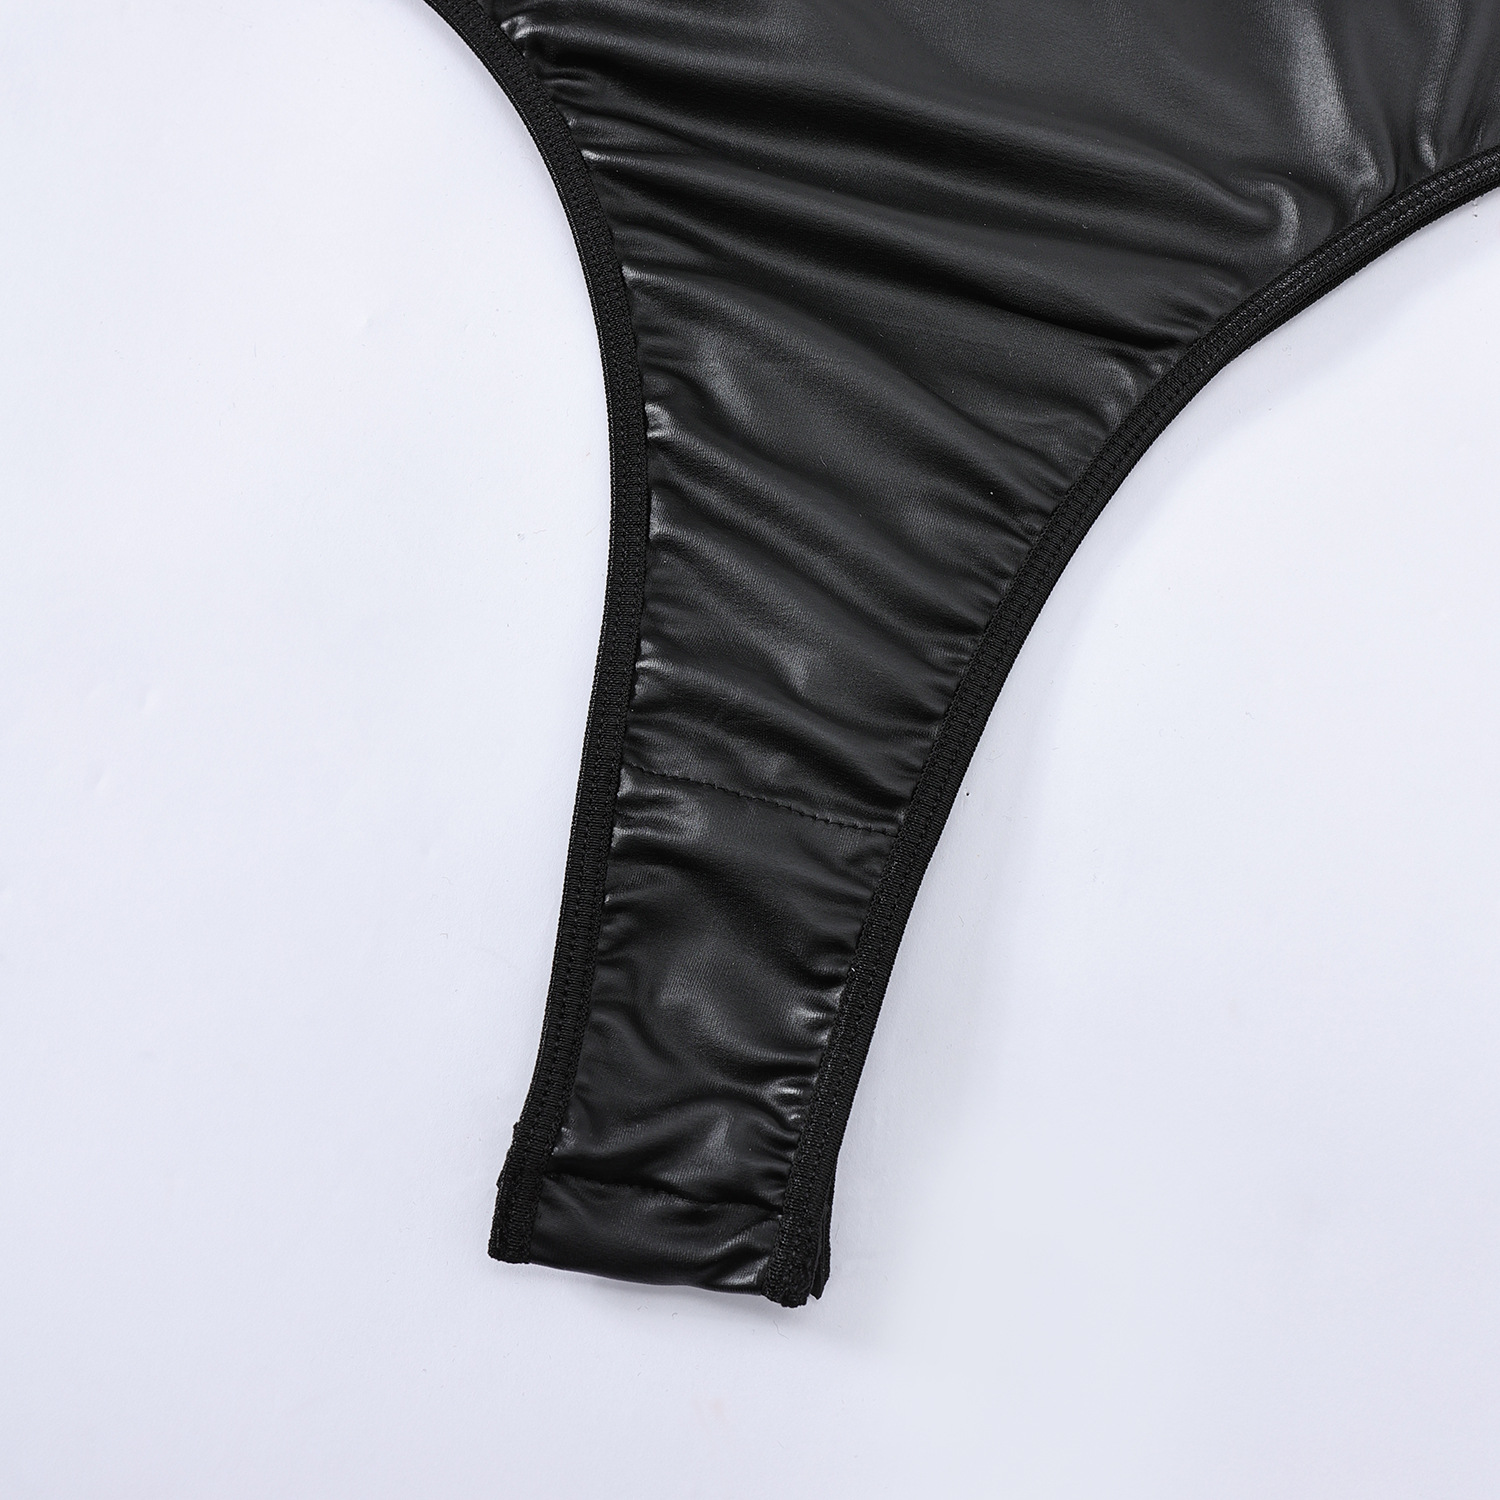 Lace High Waisted Black Bodysuit Lingerie For Women